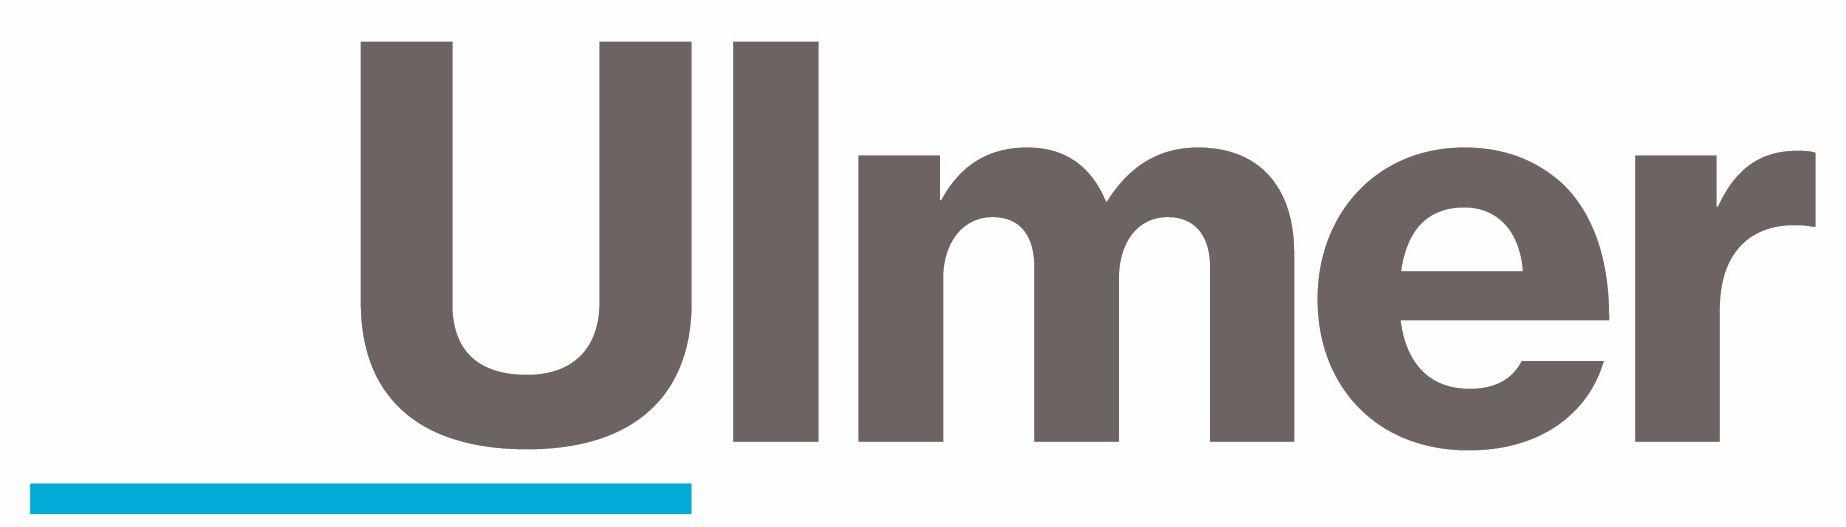 Berne Logo - Ulmer & Berne Announces Refreshed Visual Identity